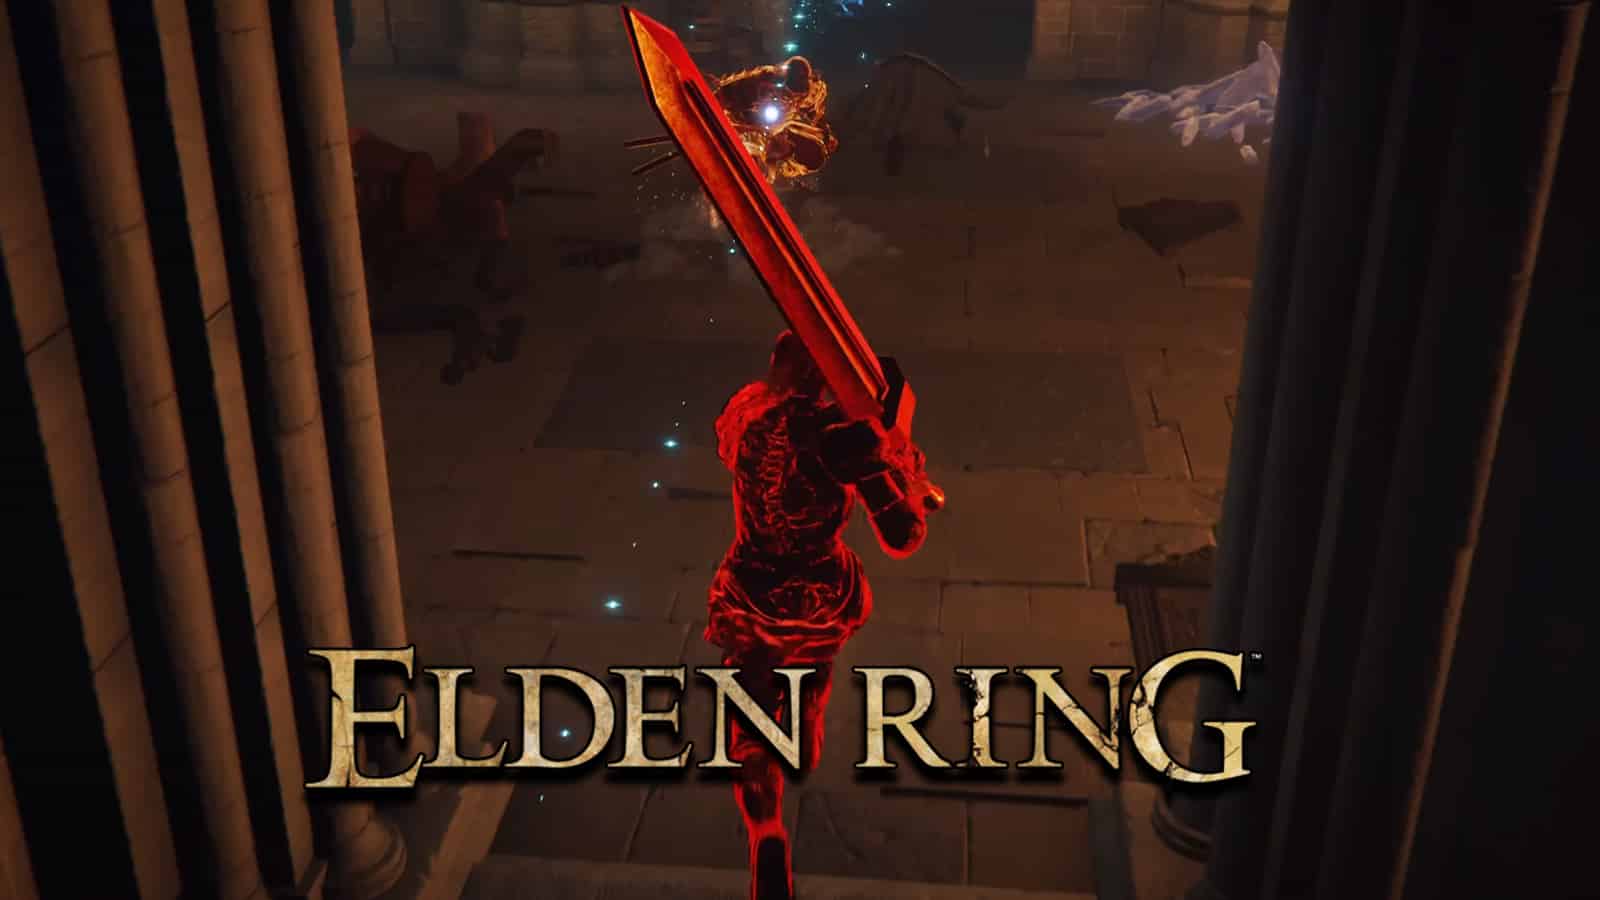 Elden Ring invasion player holding great sword screenshot.